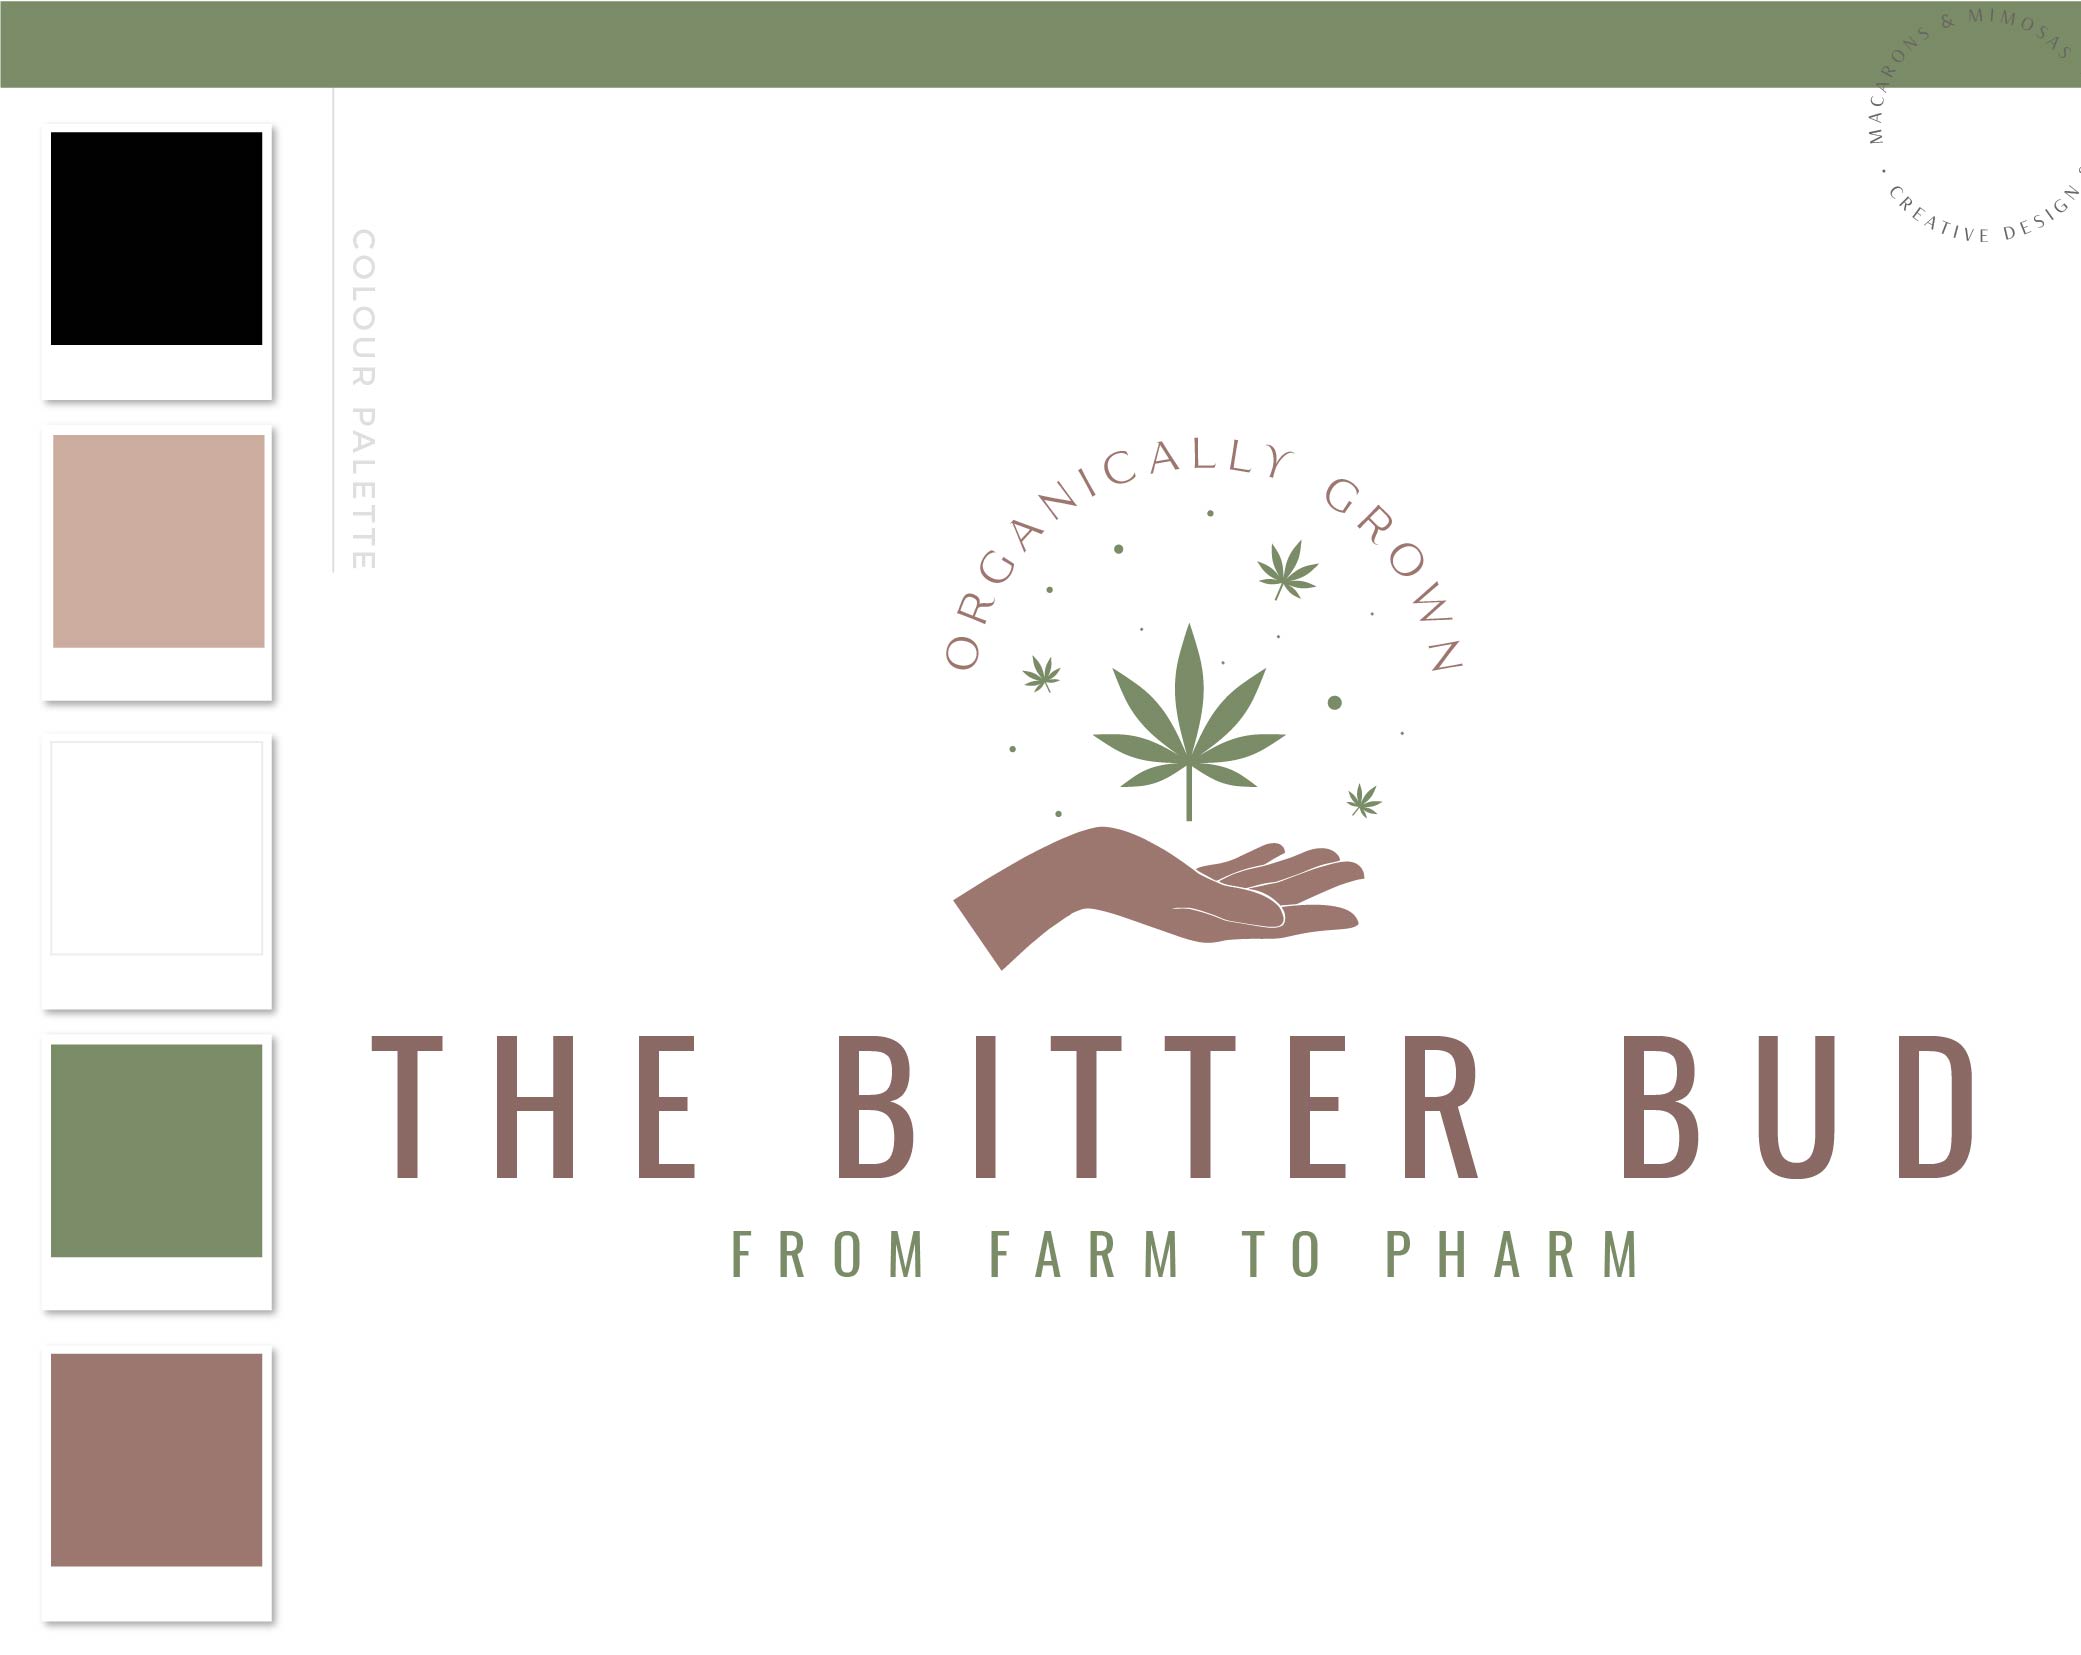 CBD Oil Logo, Cannabis Logo, Marijuana Dispensary Logo, Health Weed Logo, THC Logo Brand for Smoke Shop, Organic Nature Leaf Watermark